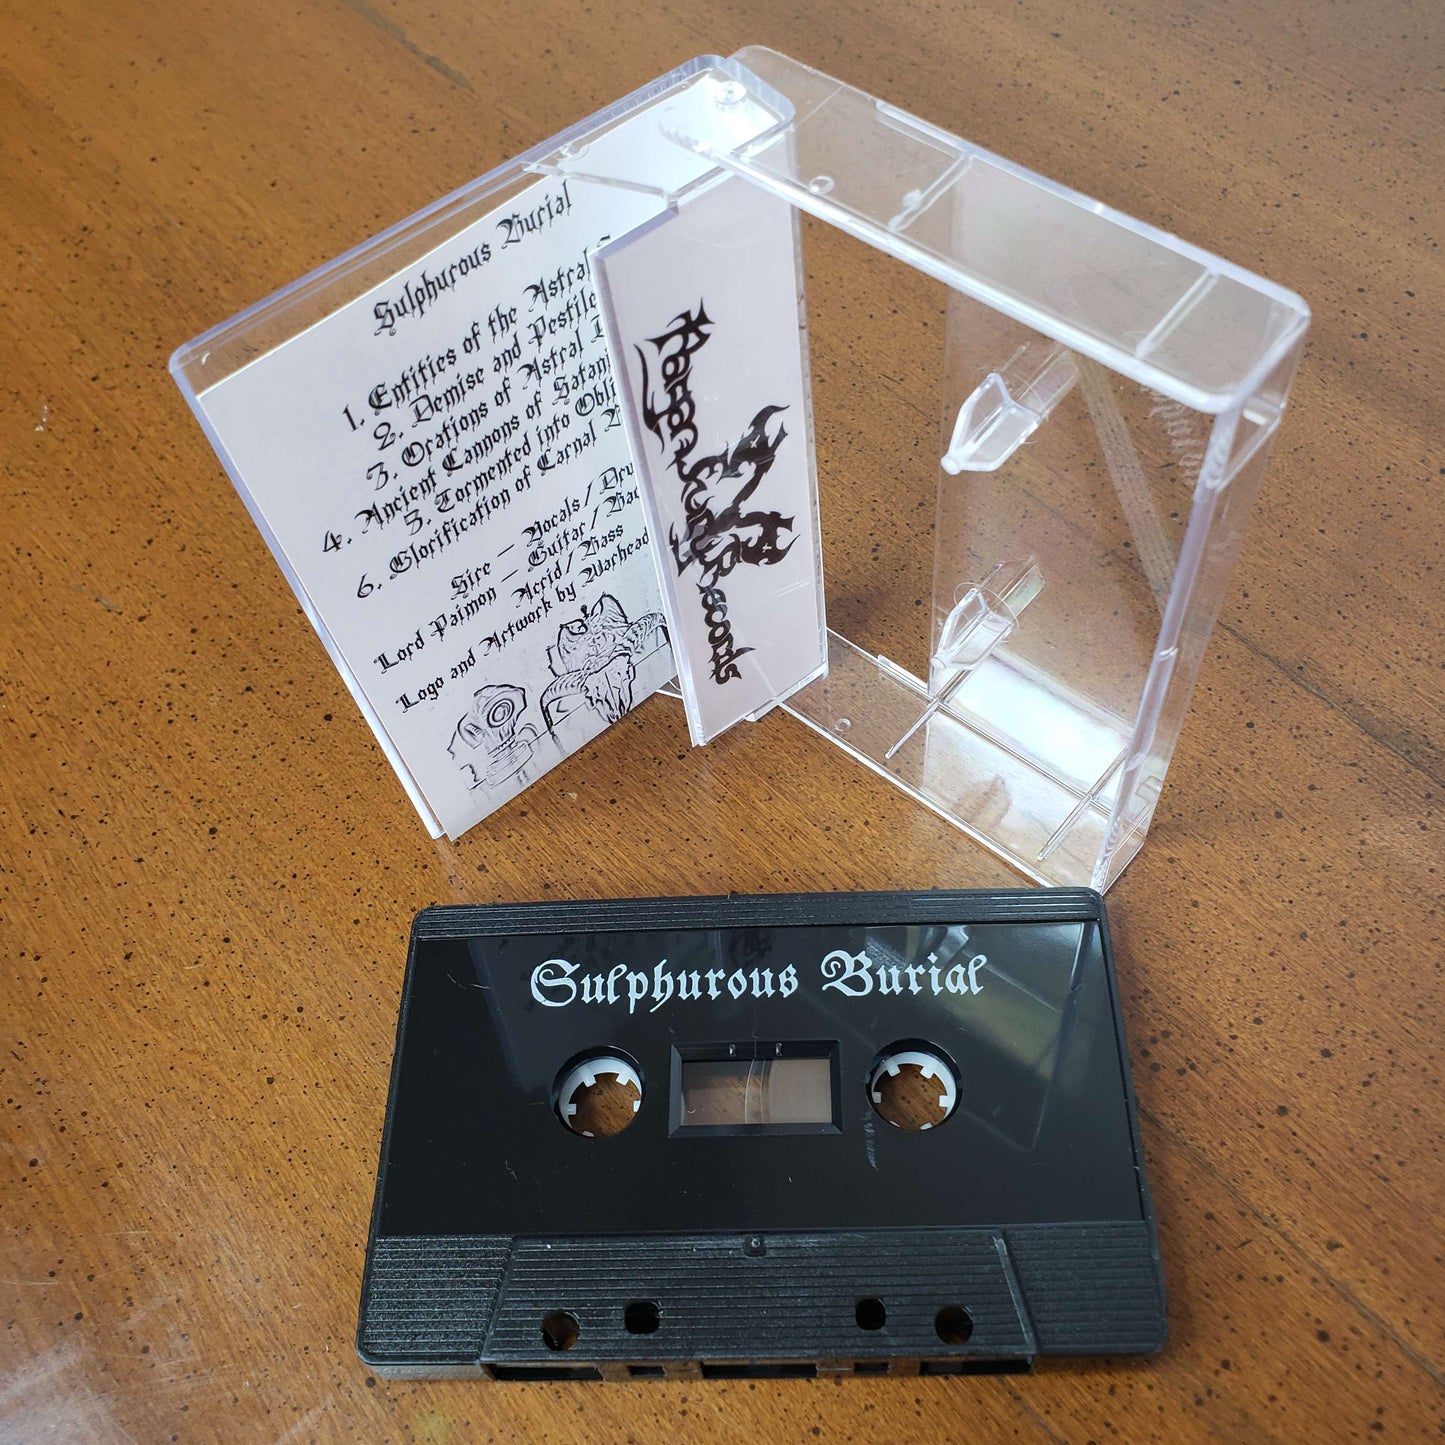 Sulphurous Burial - Demo cassette tape